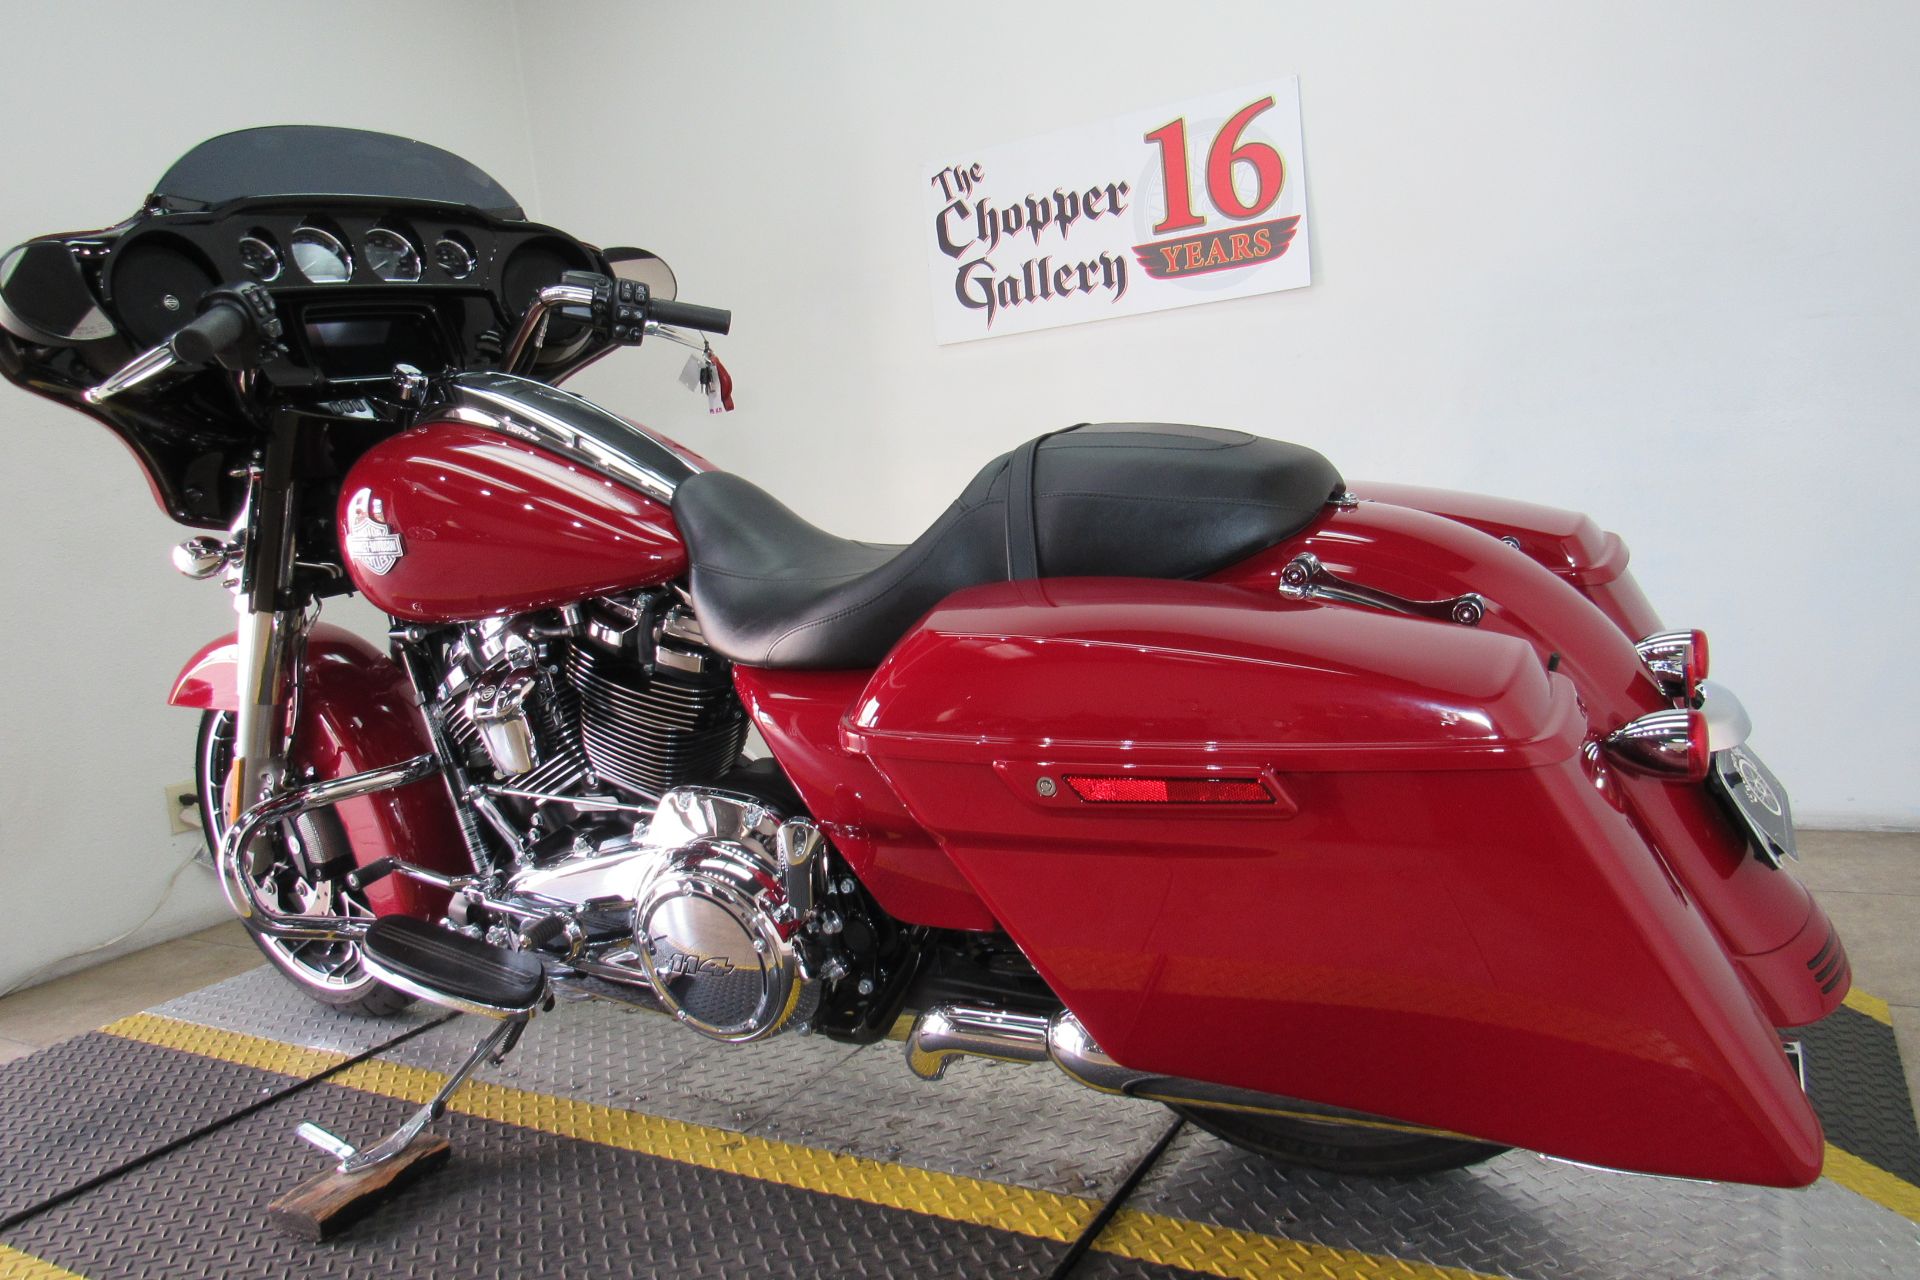 2021 Harley-Davidson Street Glide® Special in Temecula, California - Photo 34